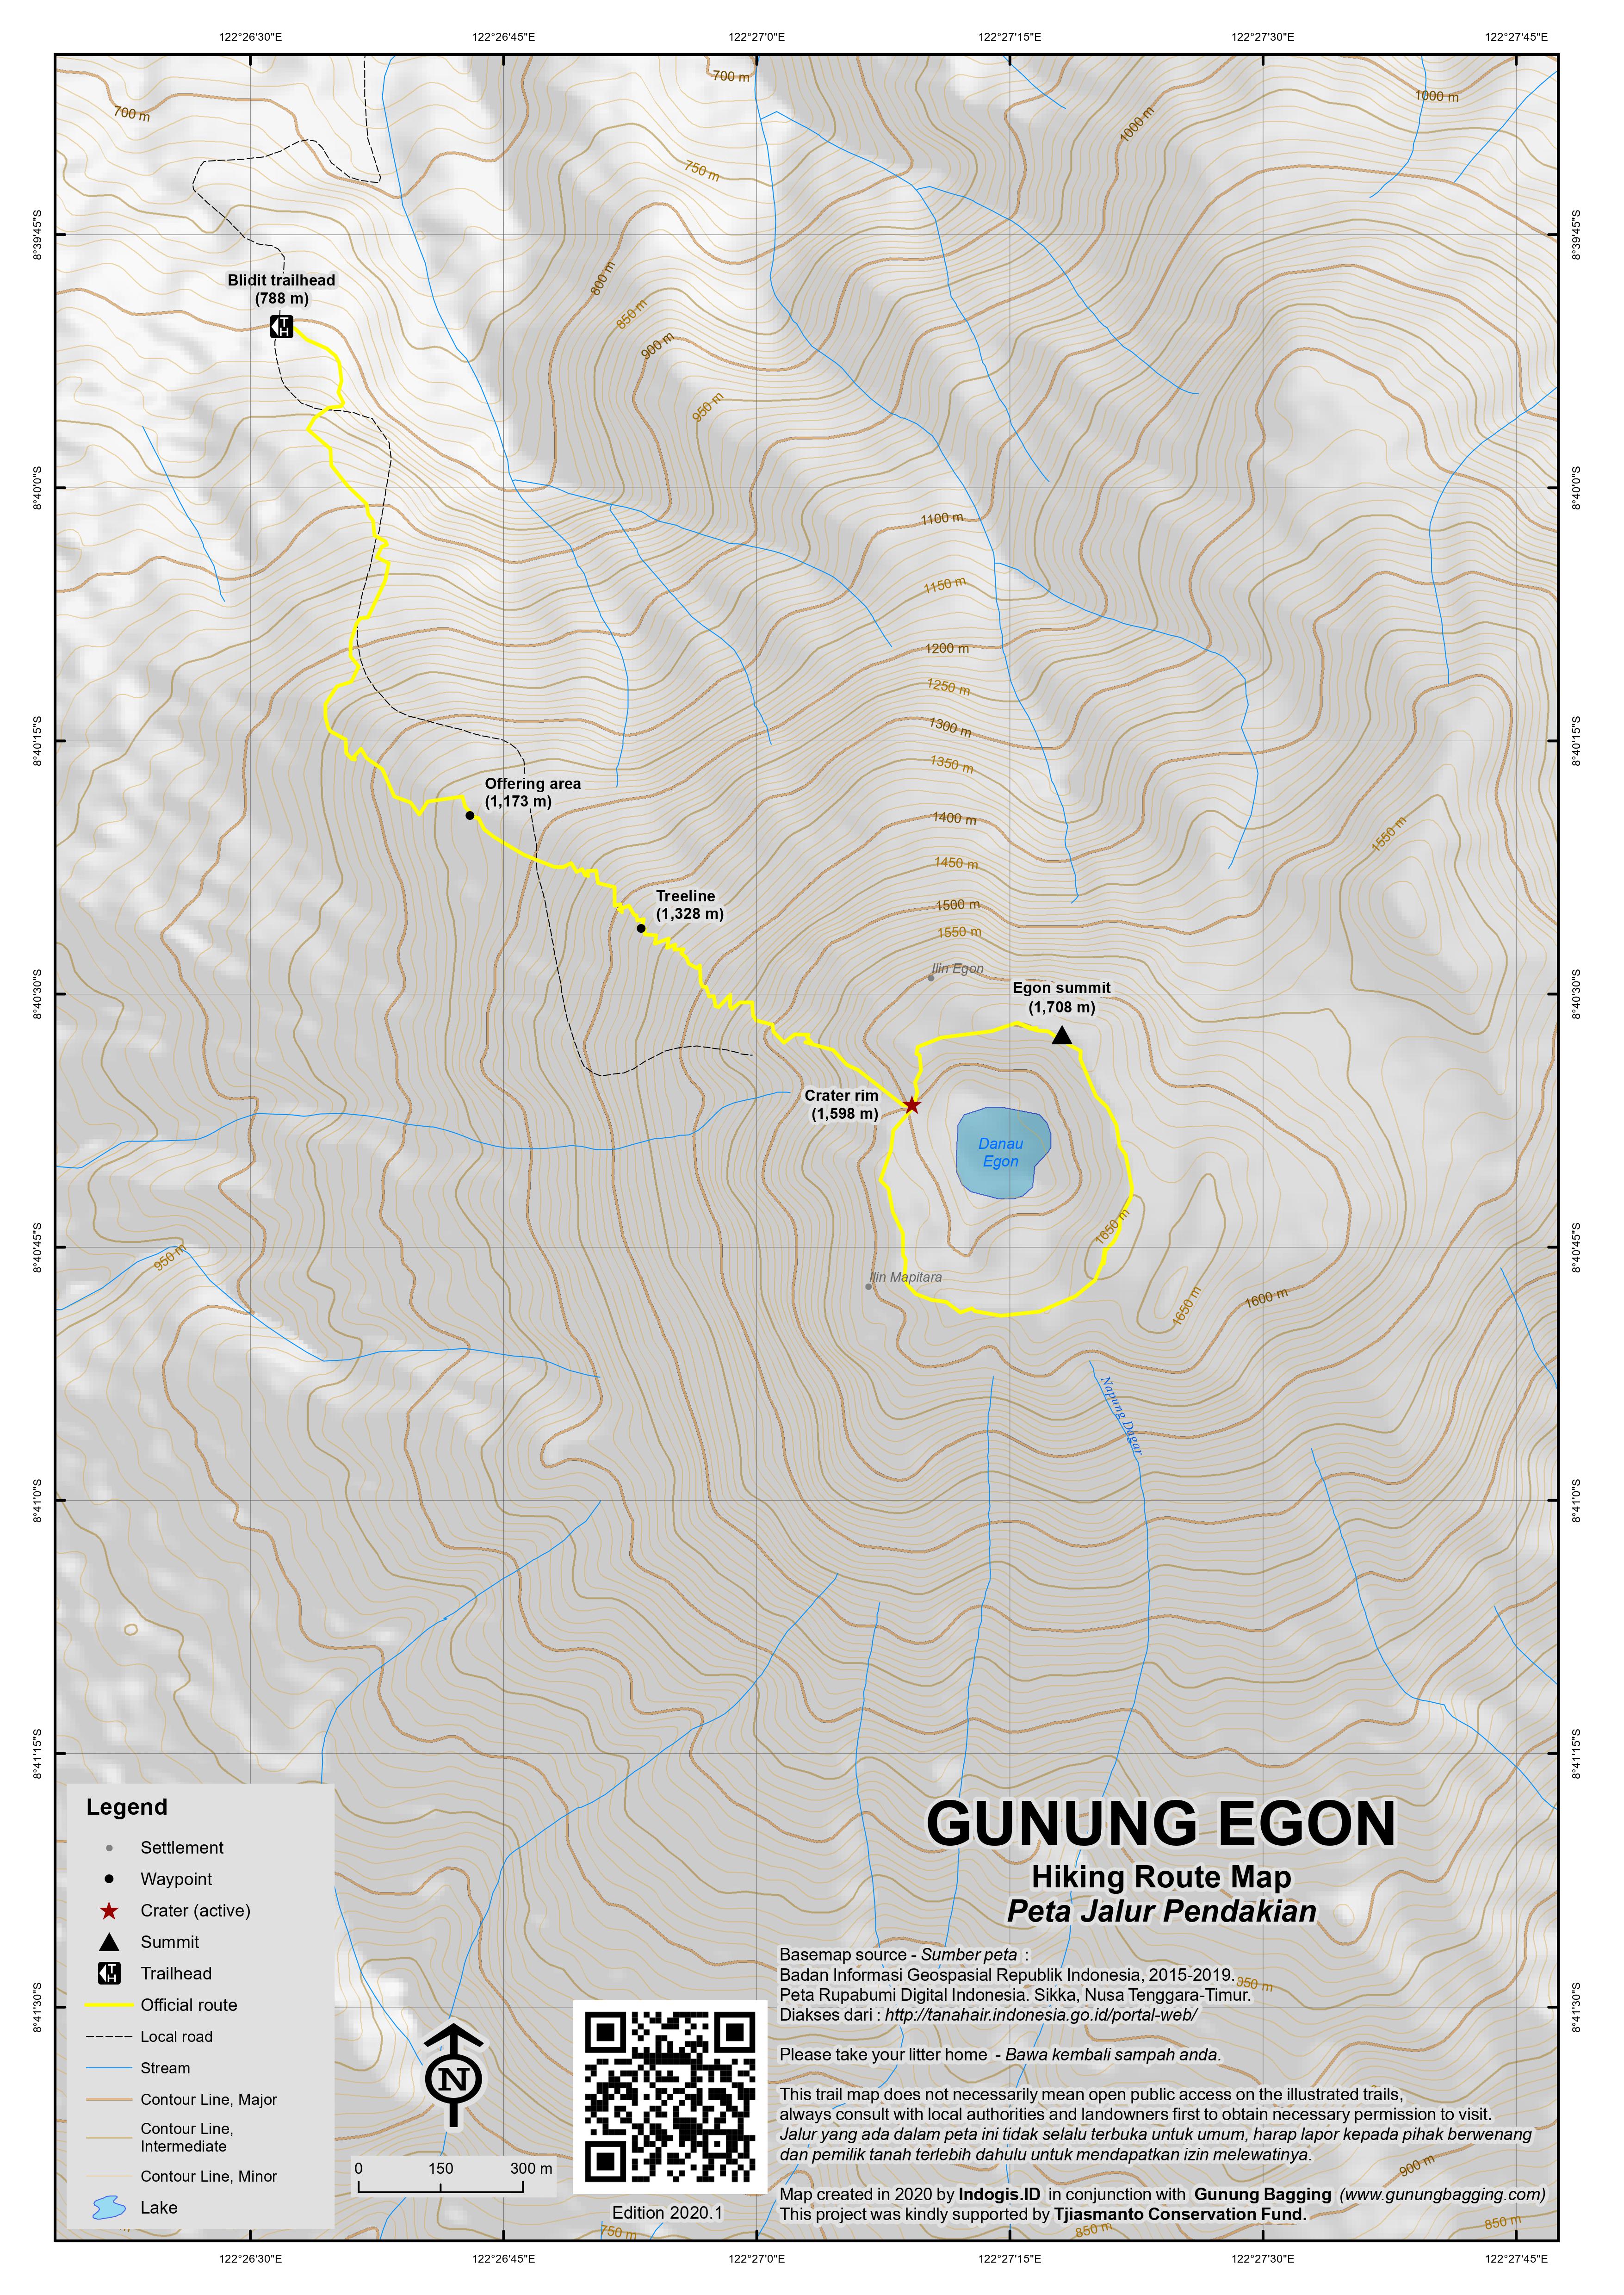 Peta Jalur Pendakian Gunung Egon